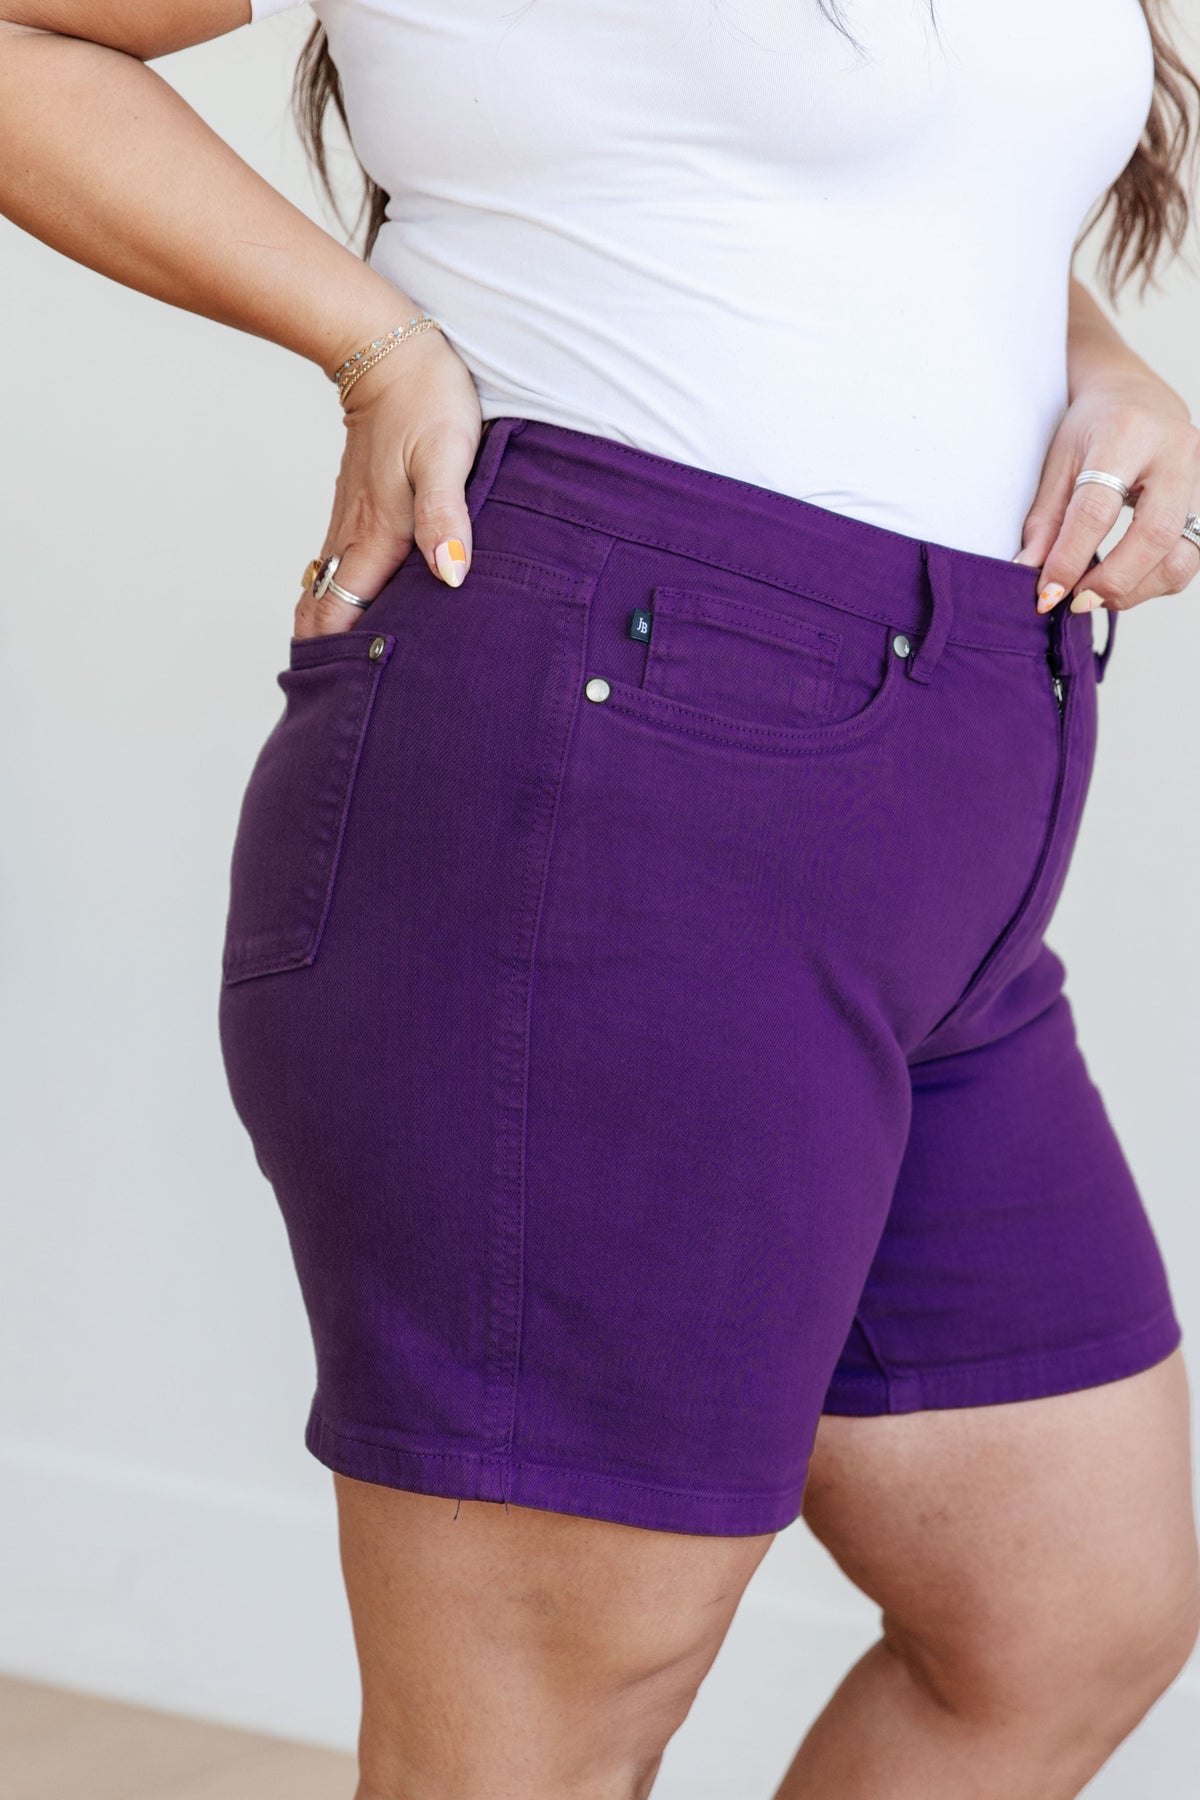 Judy Blue Jenna High Rise Control Top Cuffed Shorts in Purple